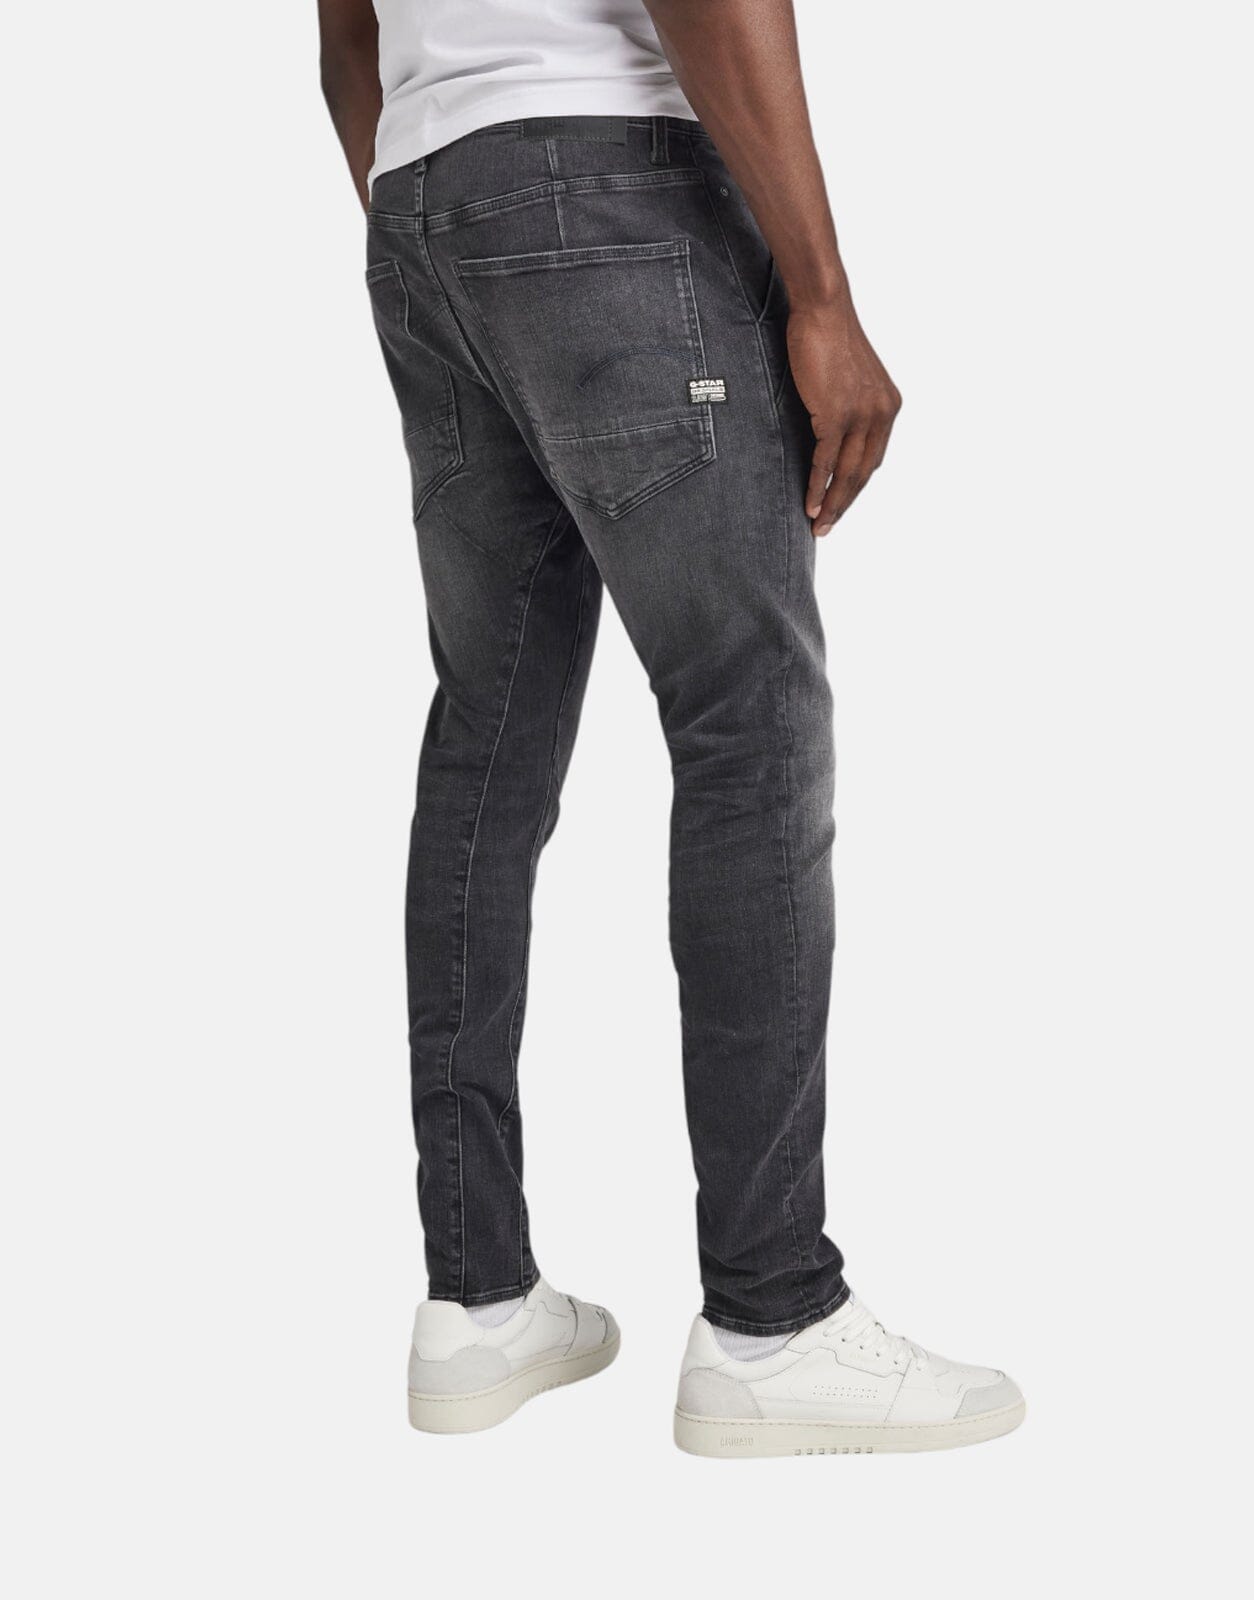 G-Star RAW Kairori 3D Slim Worn Black Jeans